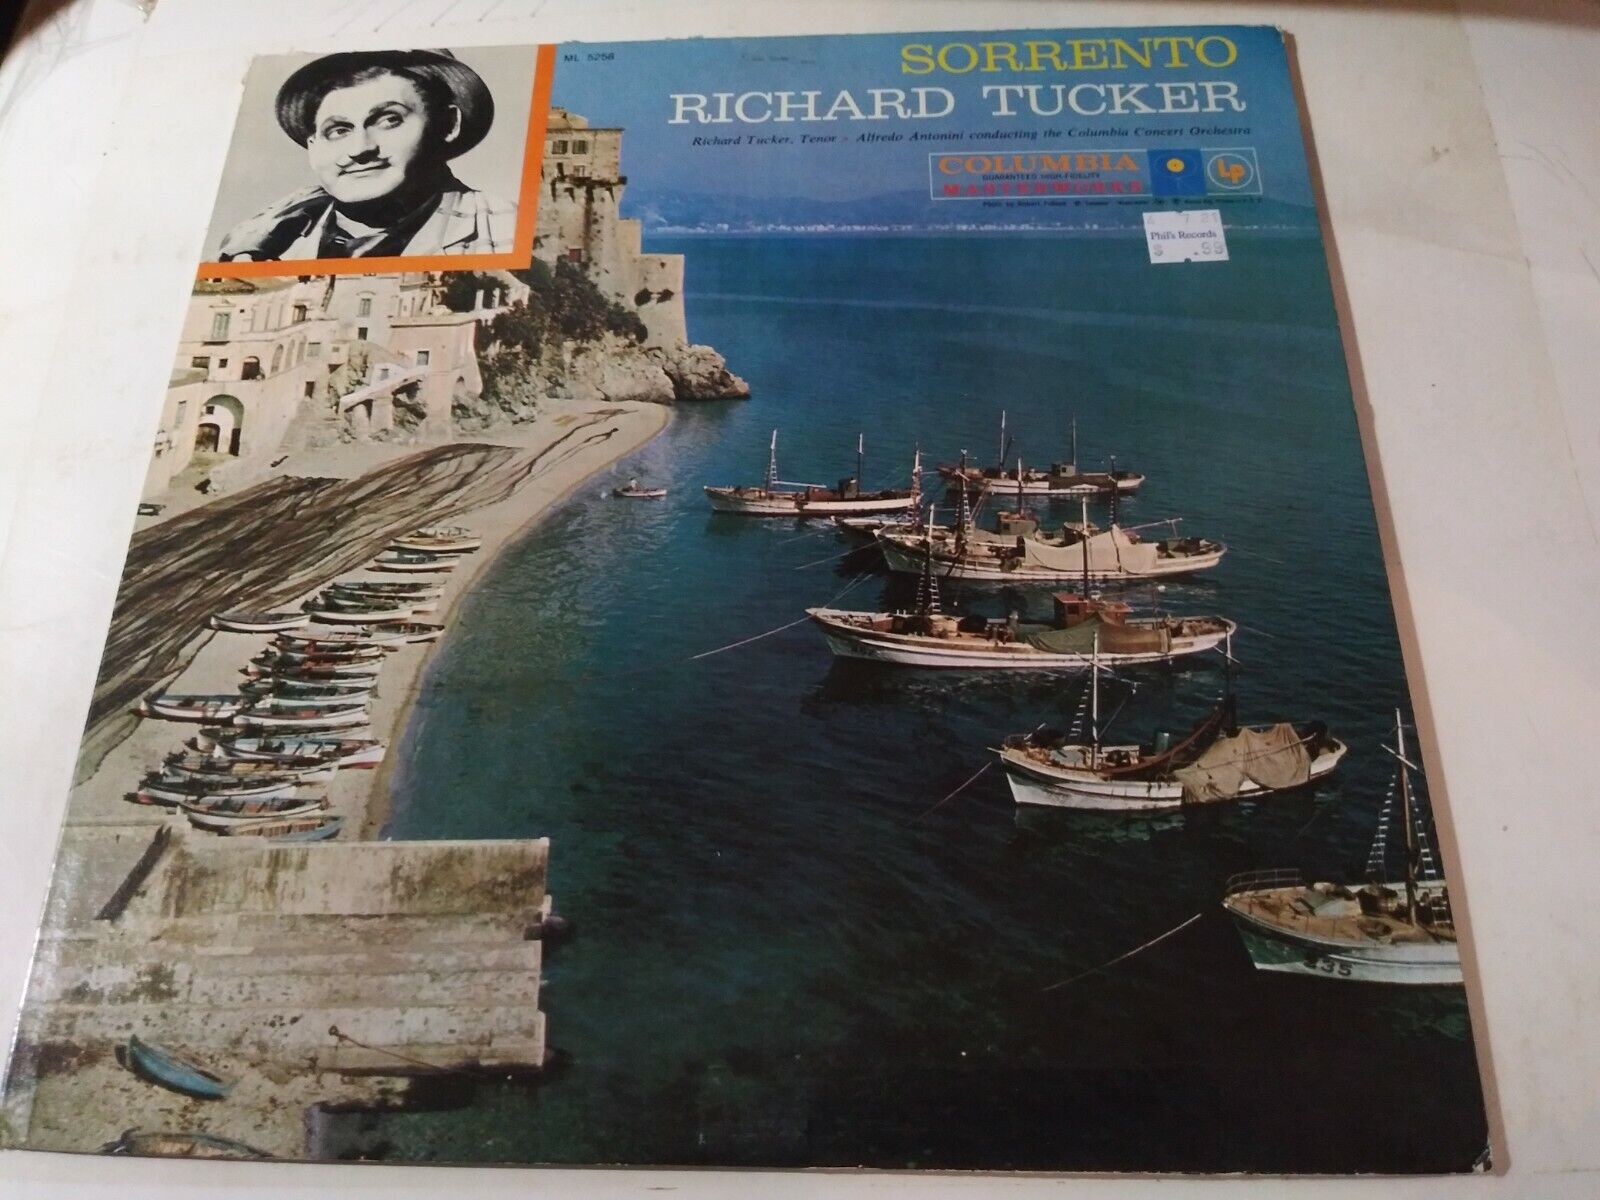 Richard Tucker - Sorrento VG++ Original Mono Press Columbia ML-5258 Record 1958